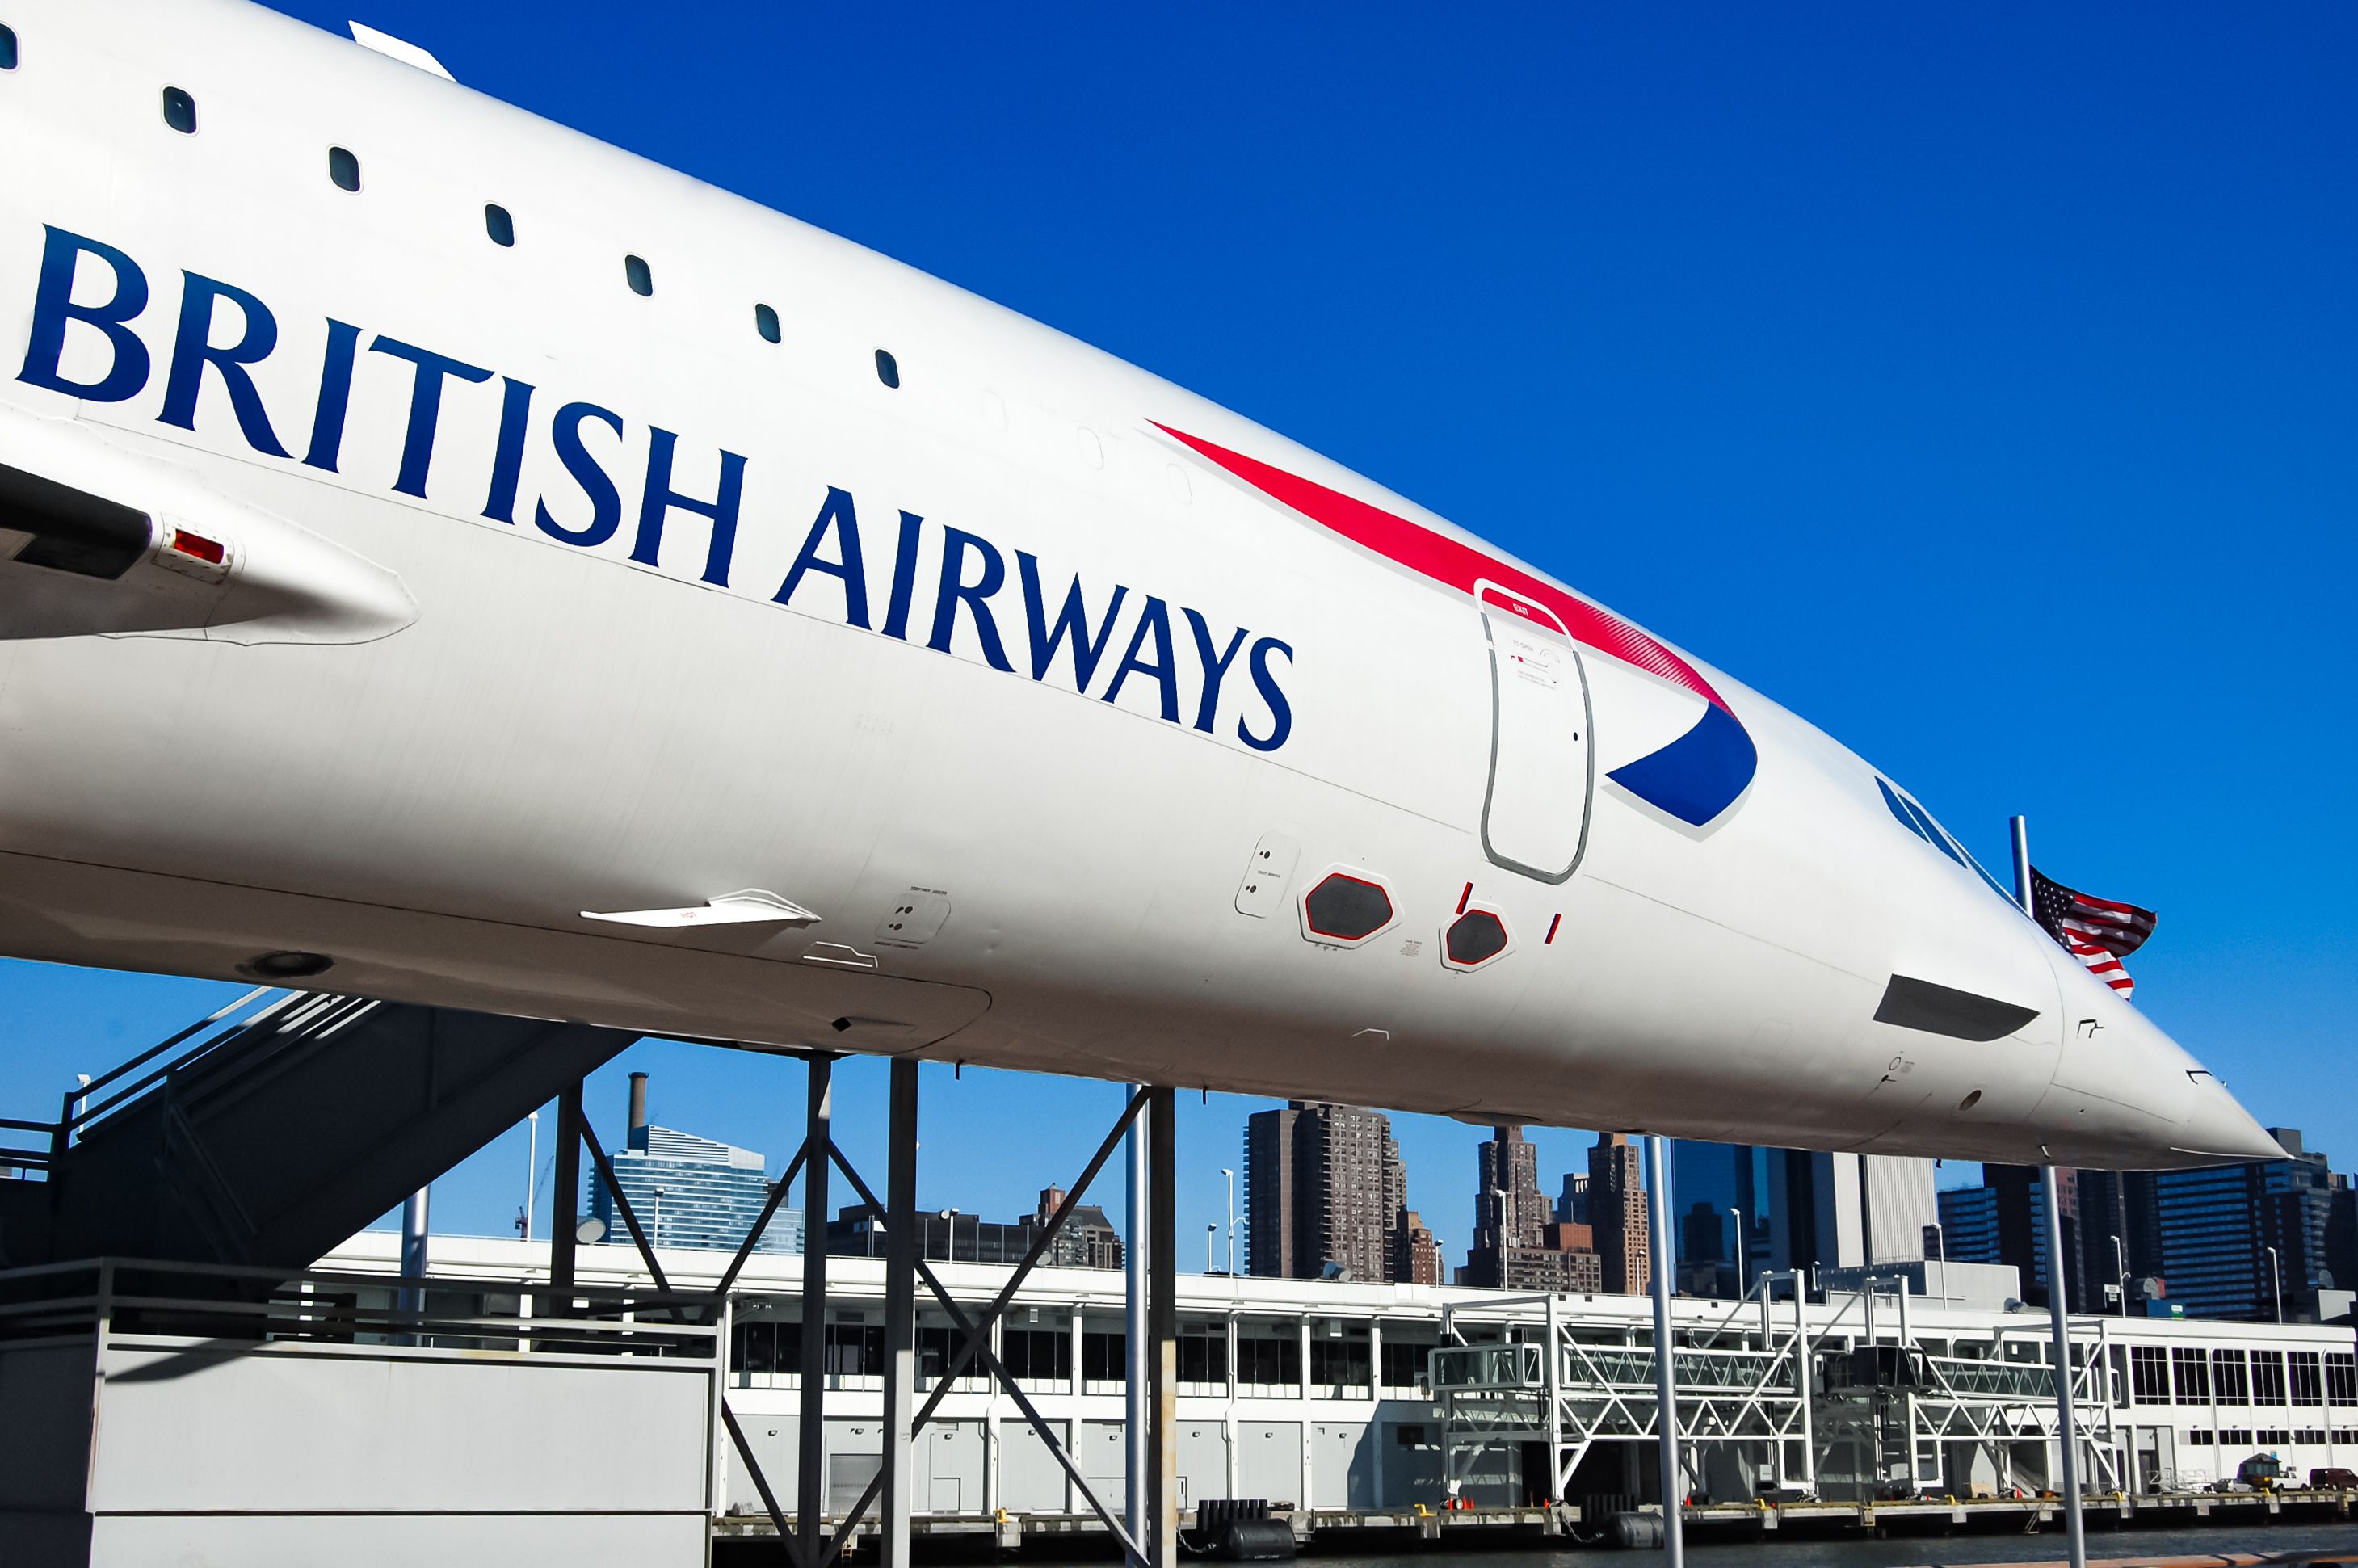 A British Airways Concorde on display.